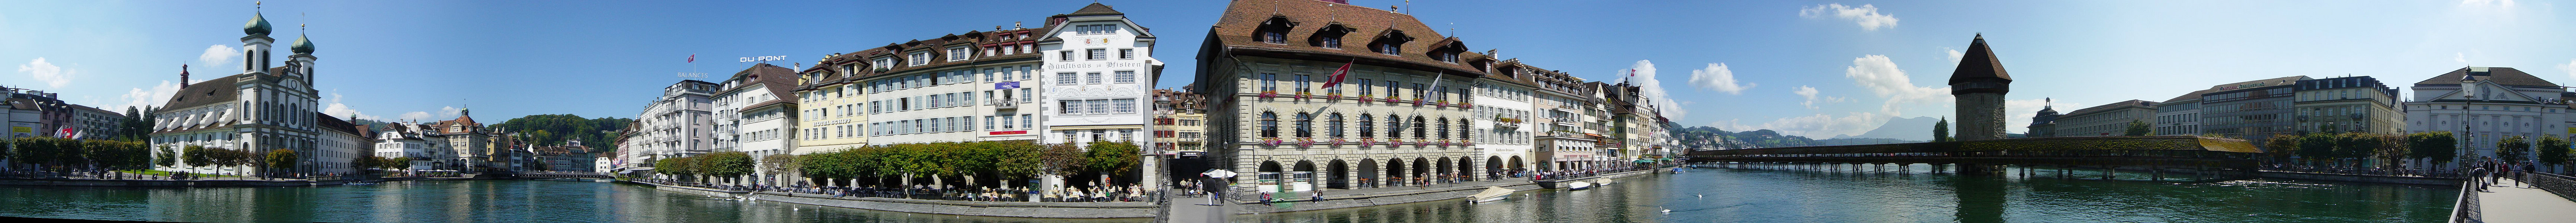 Rathaussteg Luzern